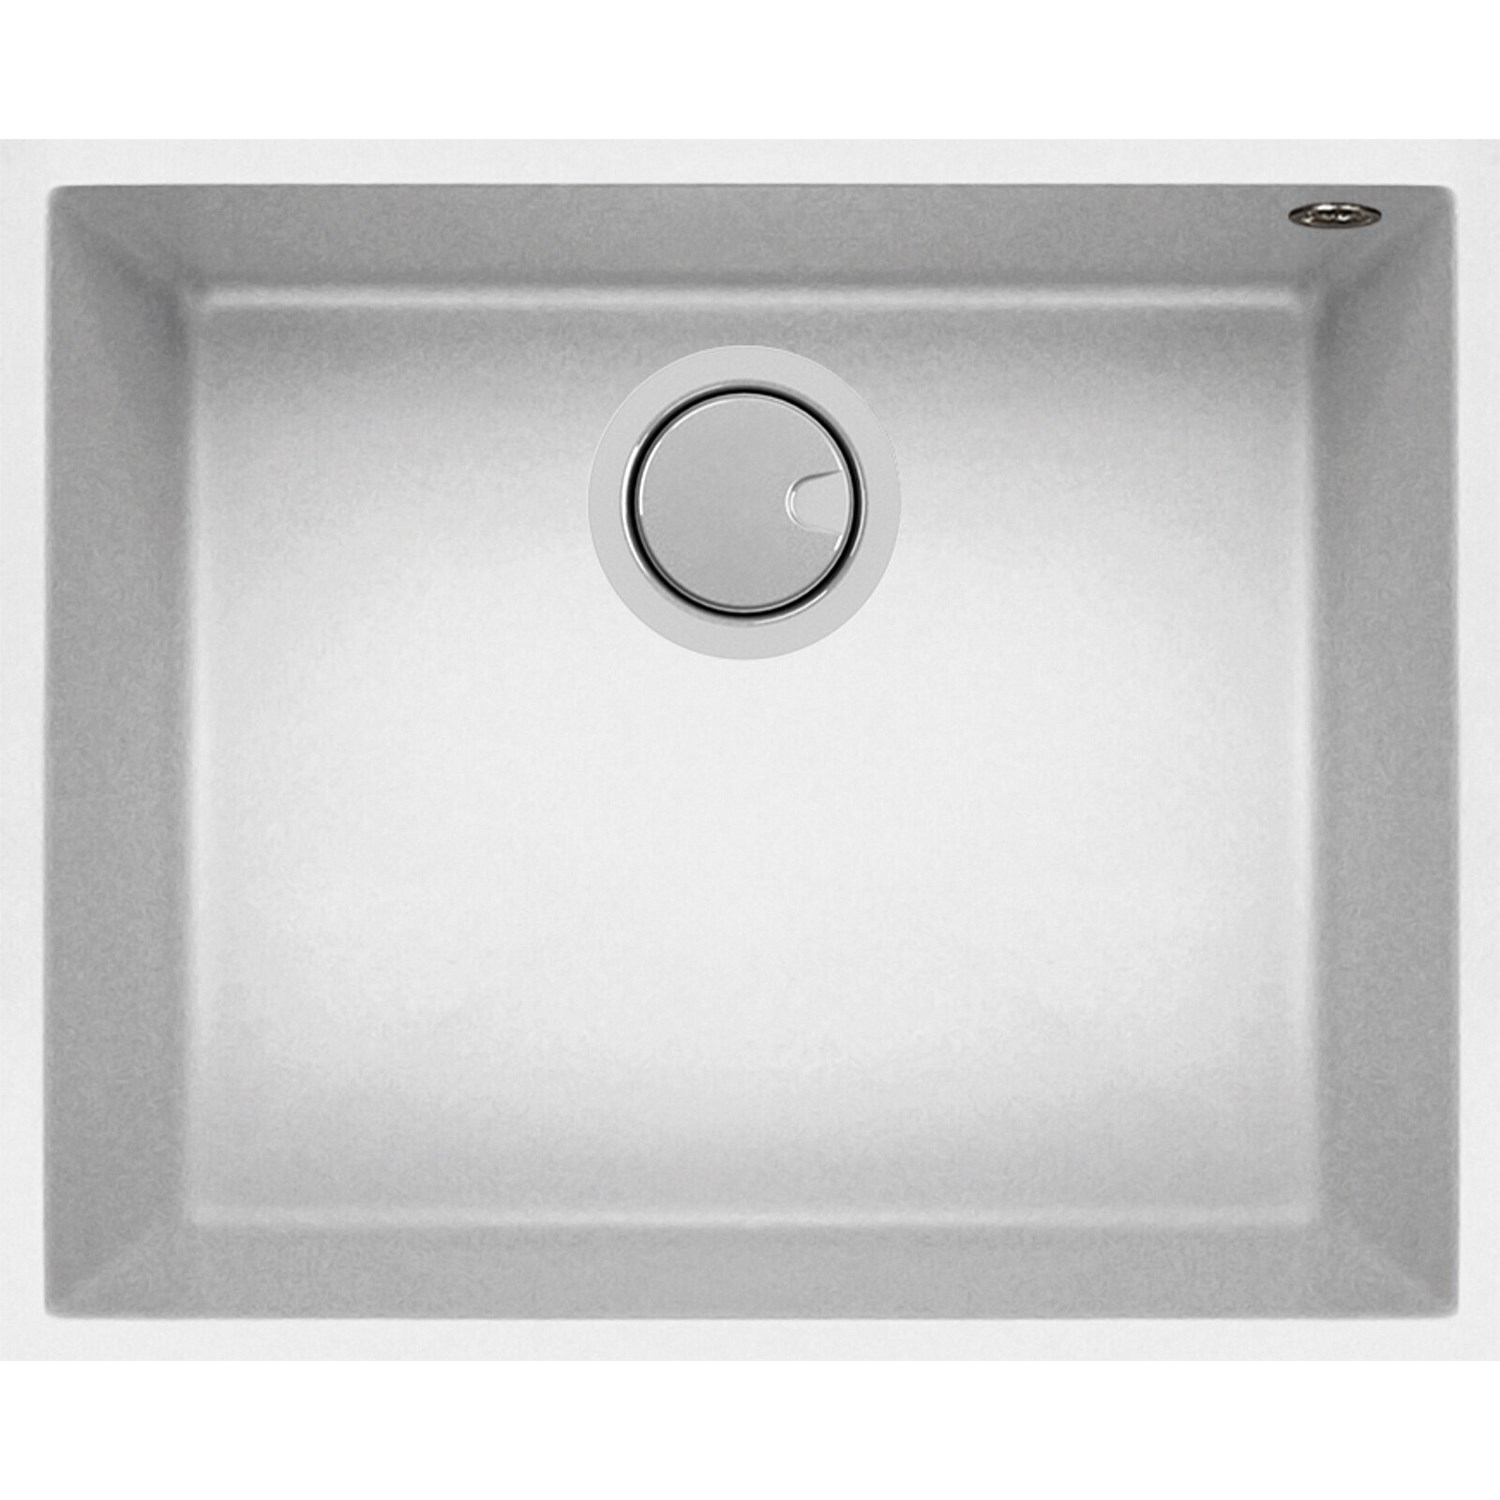 Sink Units - Mercer Duro Rome Single Bowl Sink Insert White